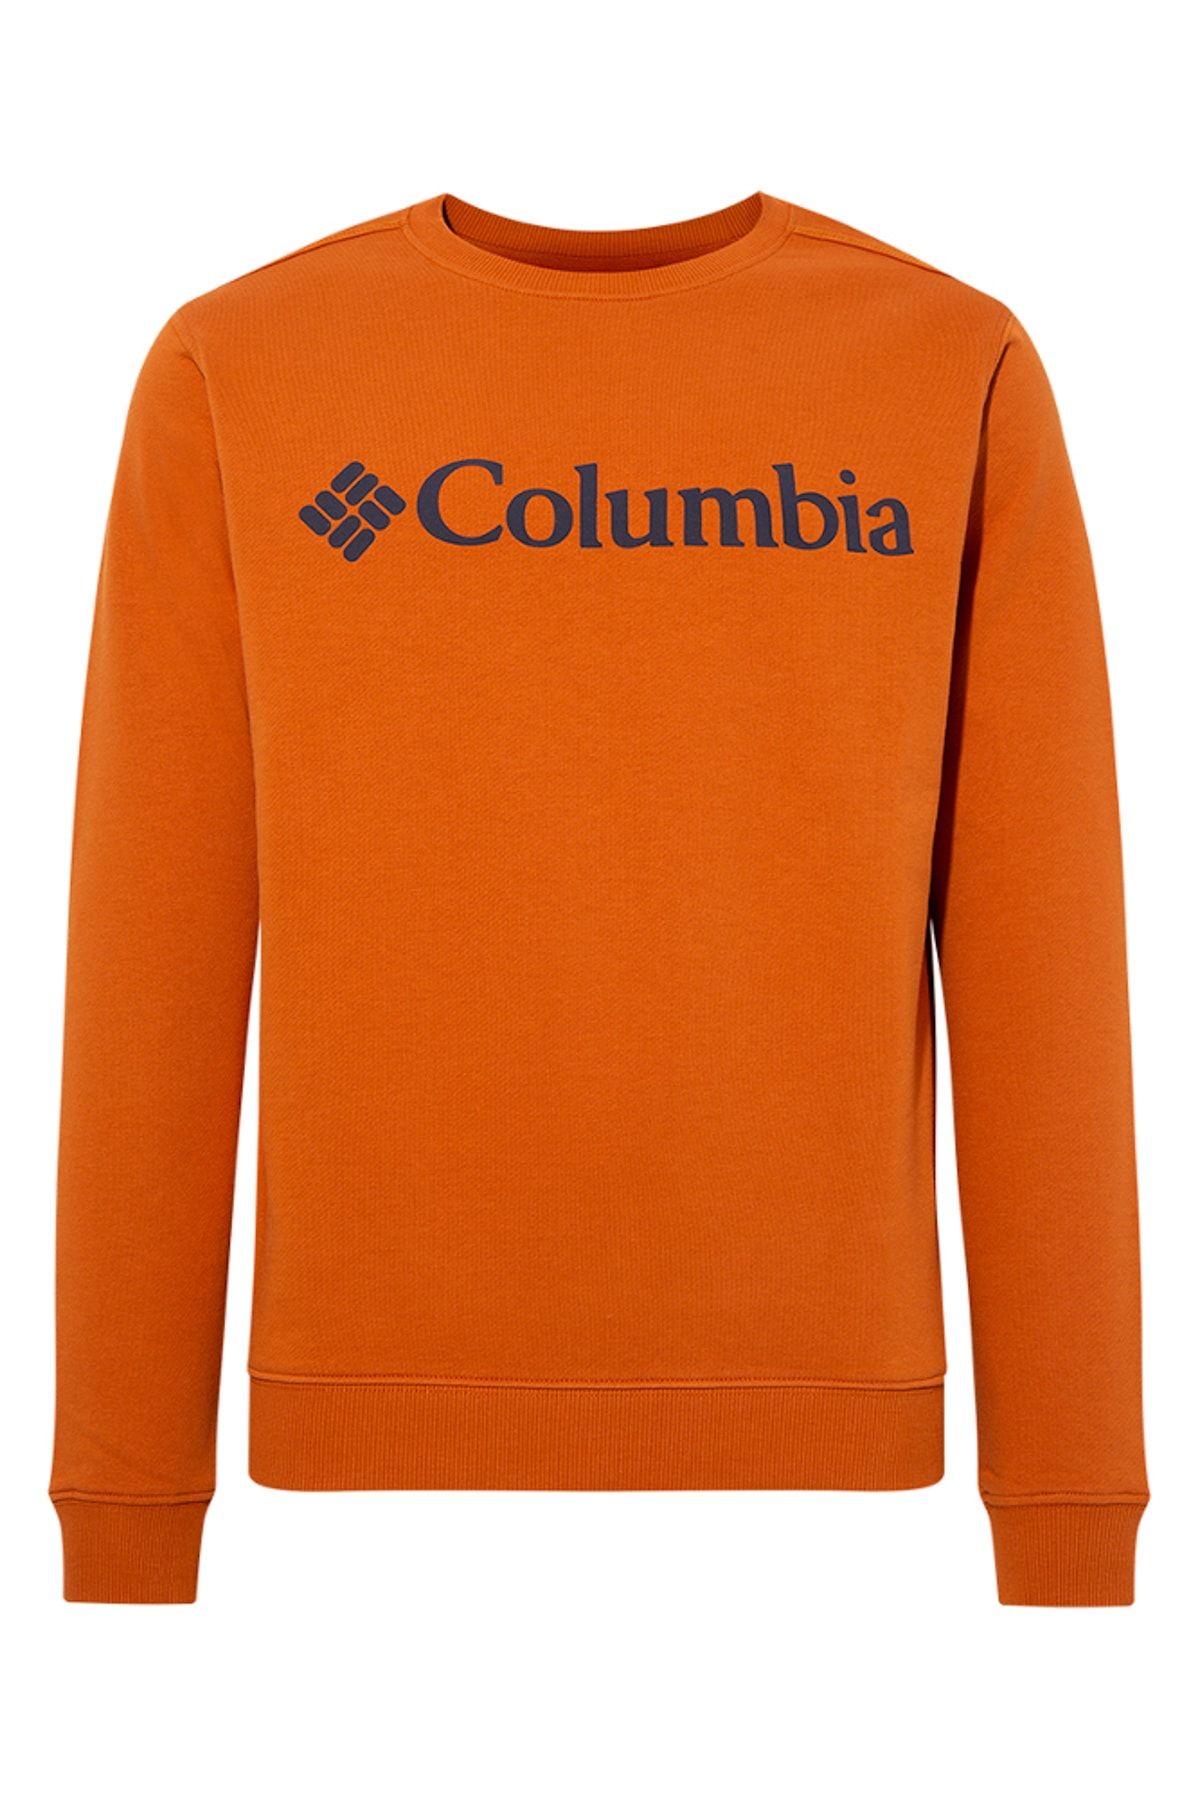 Columbia Csc M Bugasweat Erkek Sweatshirt